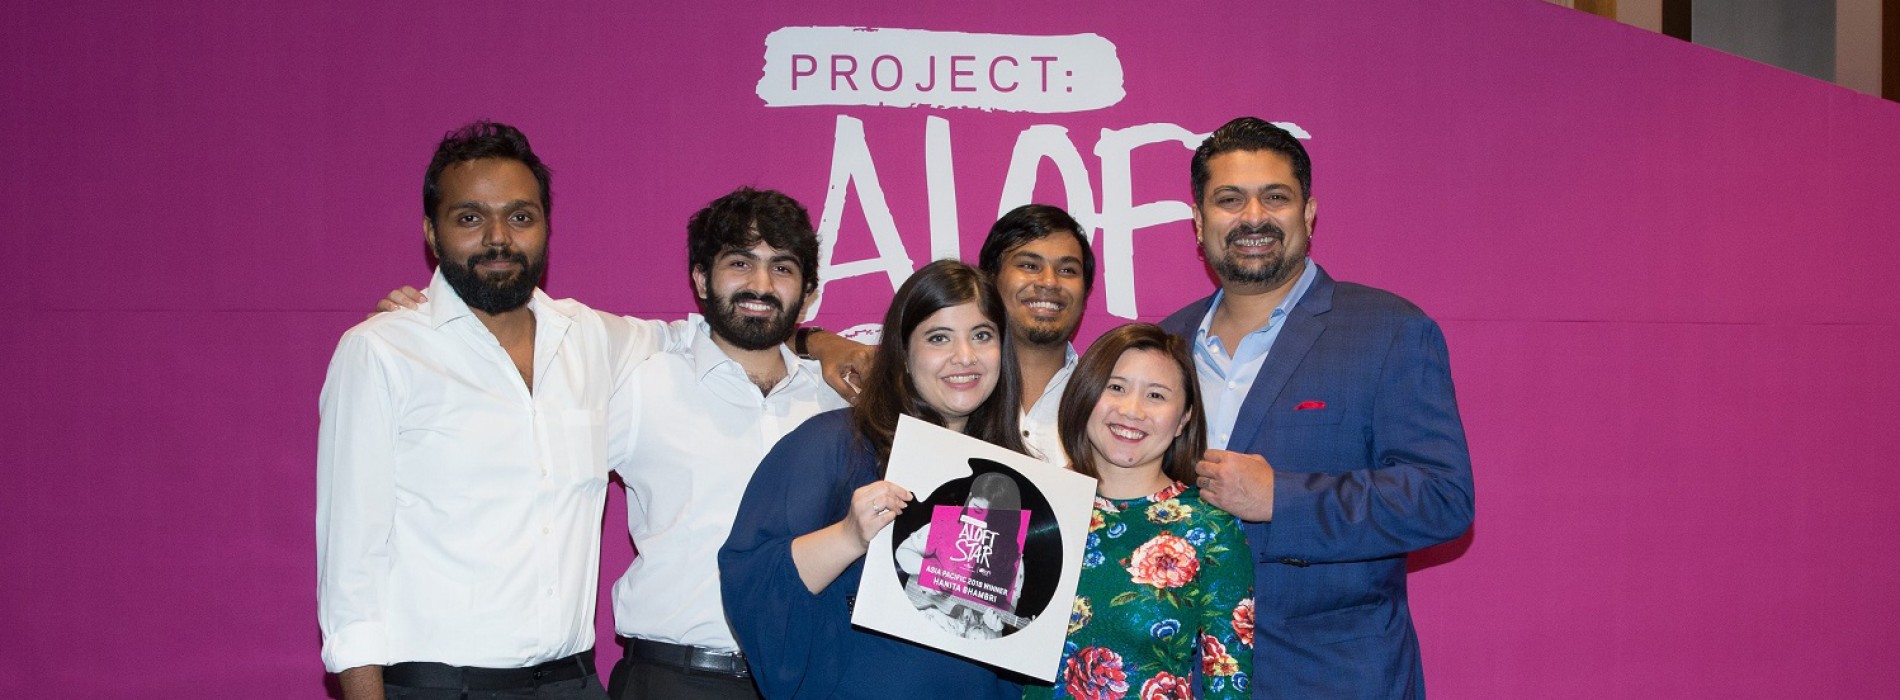 Aloft Hotels announces winner of Project: Aloft Star Asia Pacific 2018 in Seol